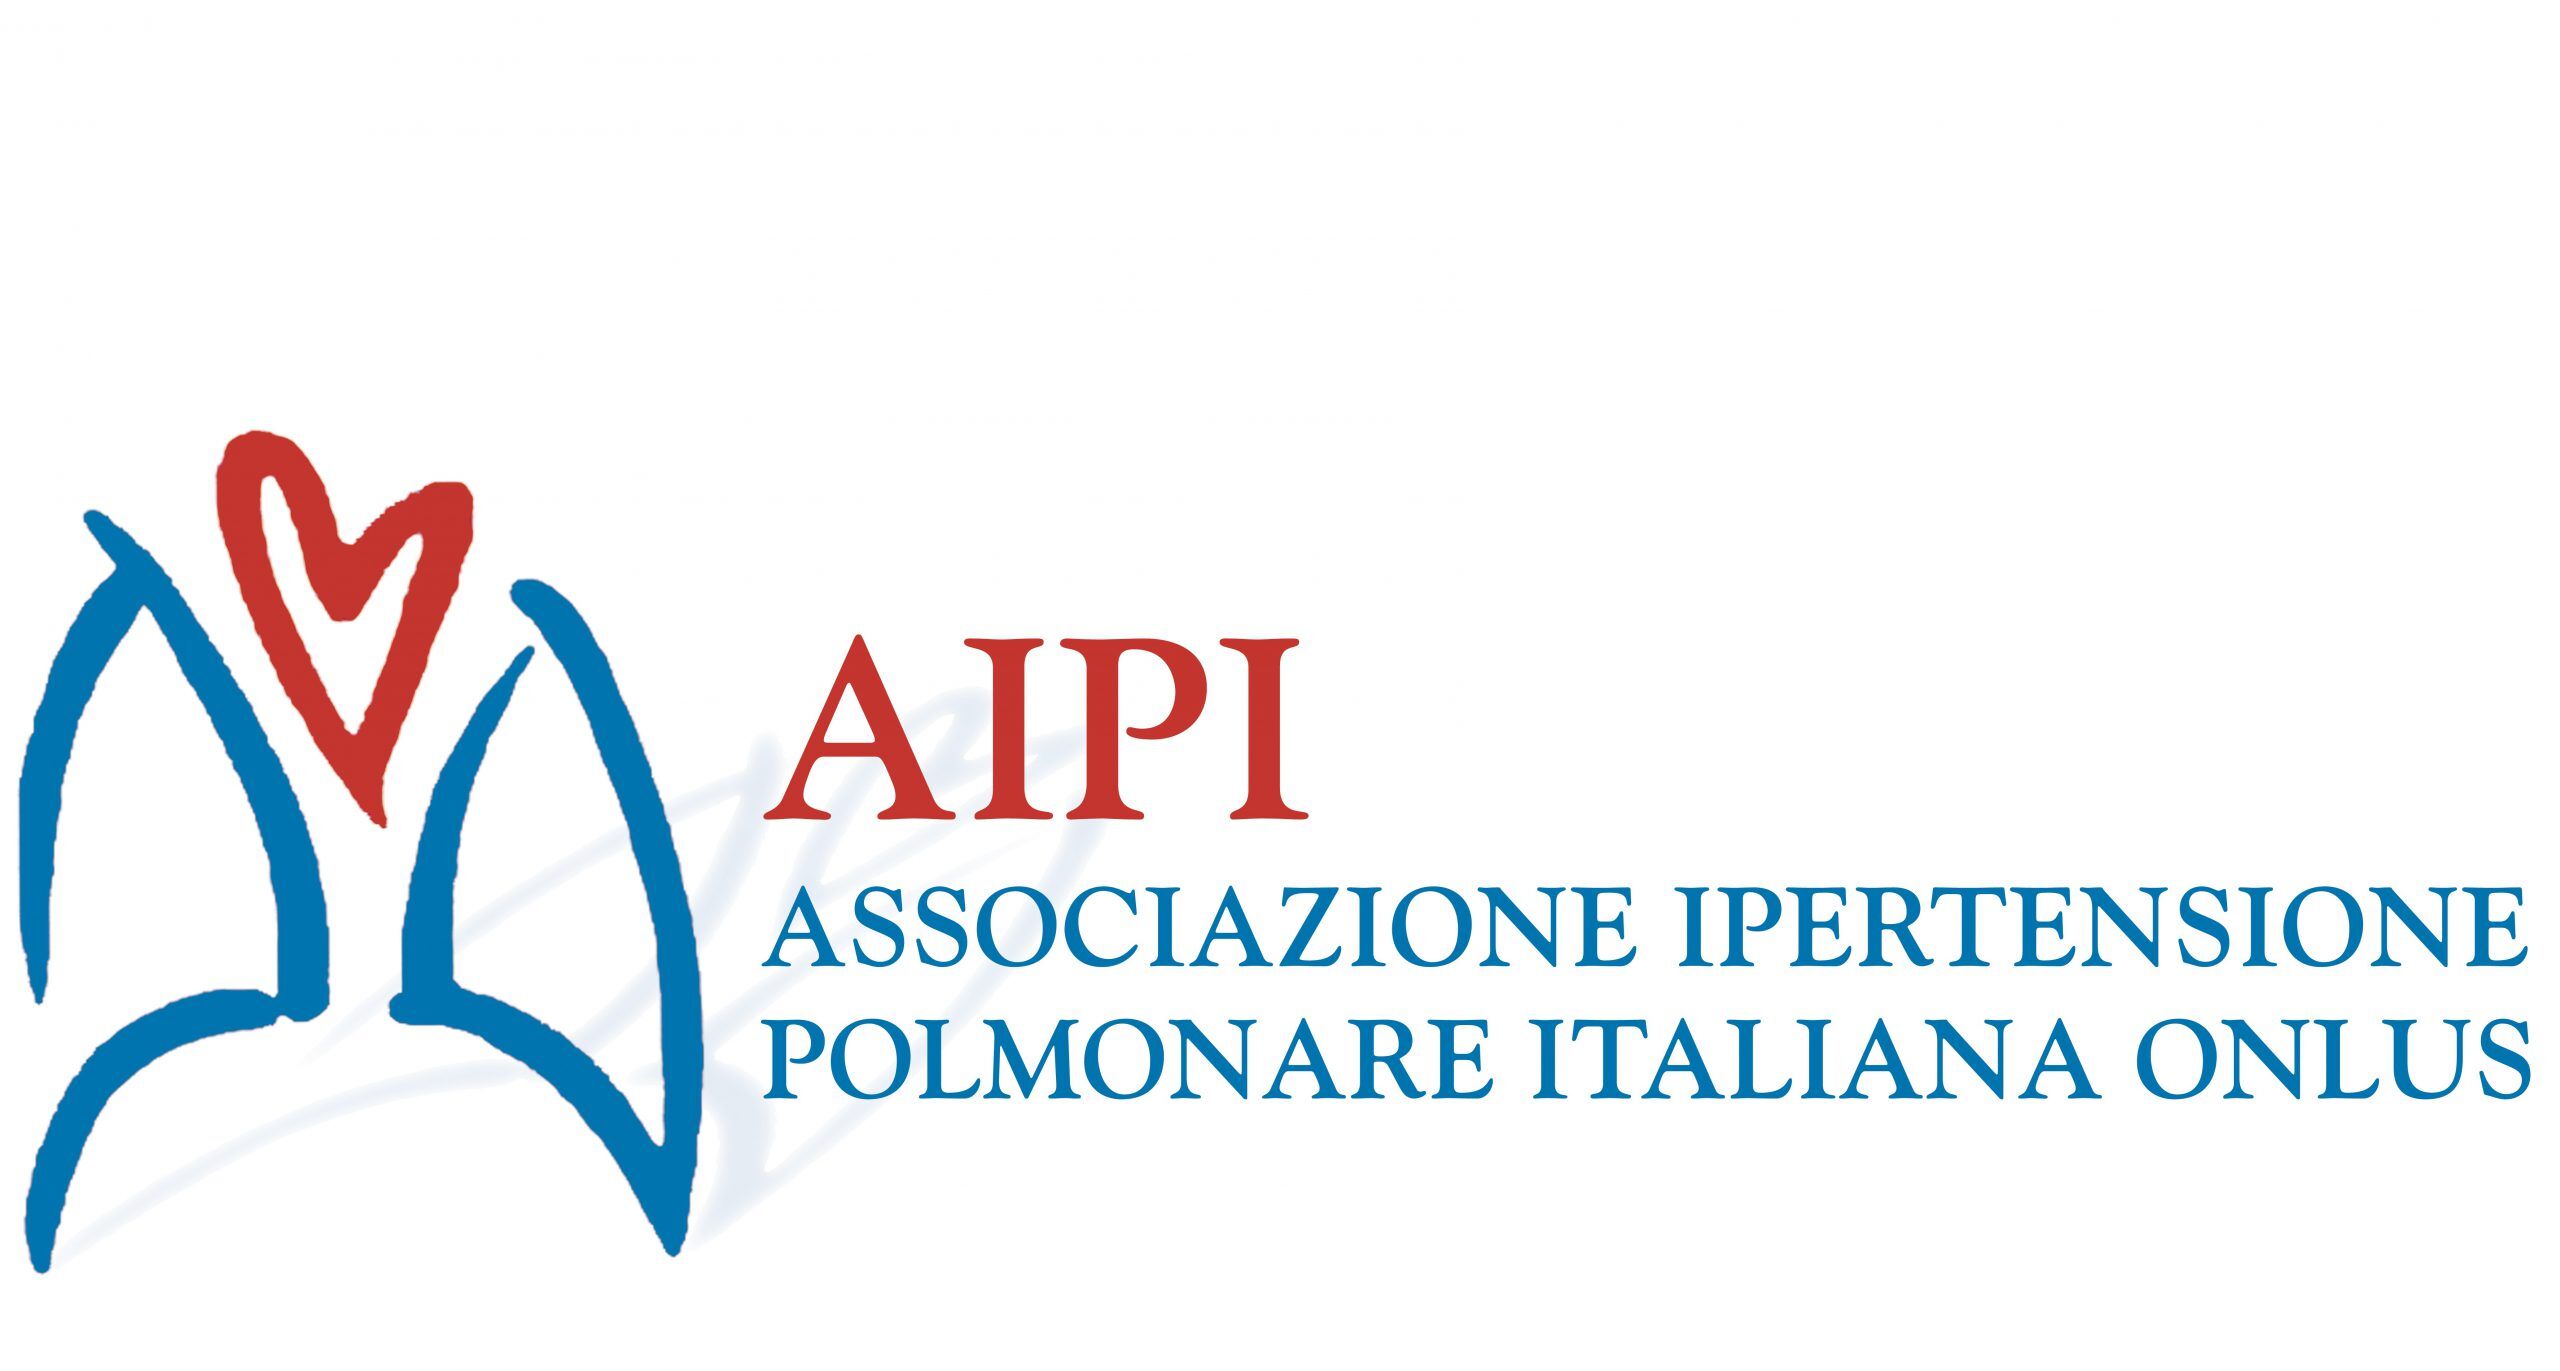 Associazione Ipertensione Polmonare Italiana Onlus